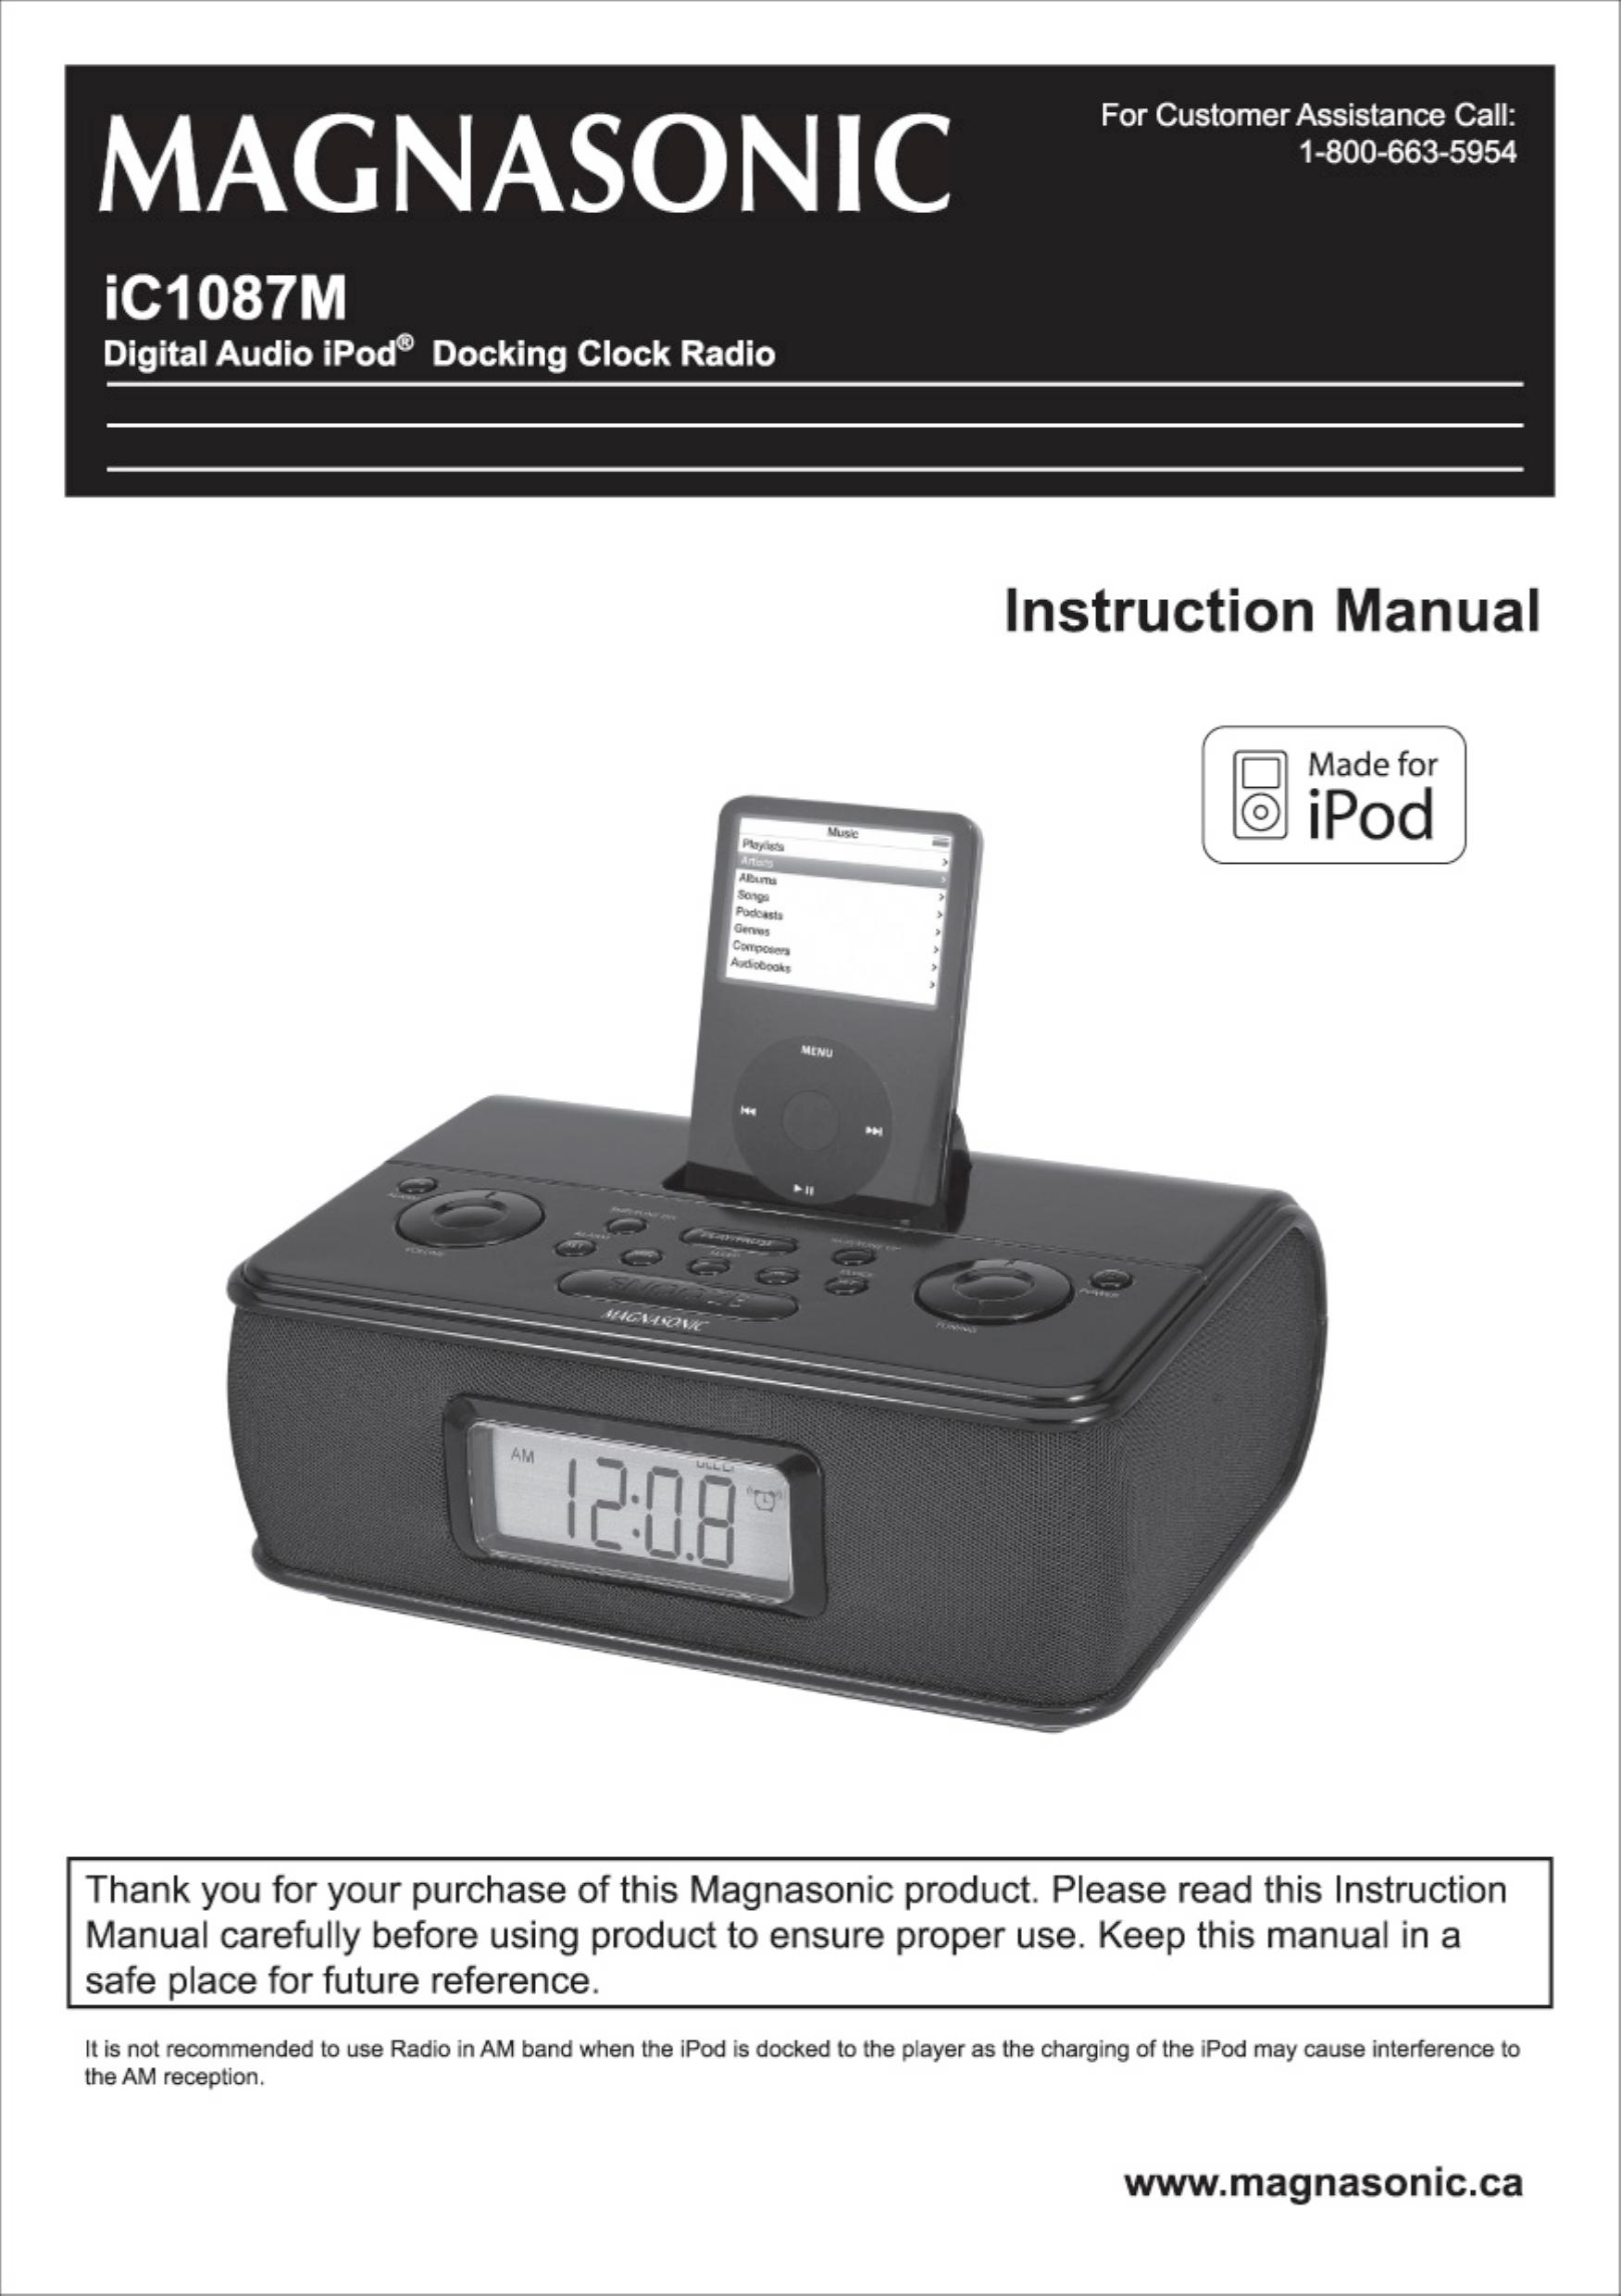 Magnasonic iC1087M Clock Radio User Manual